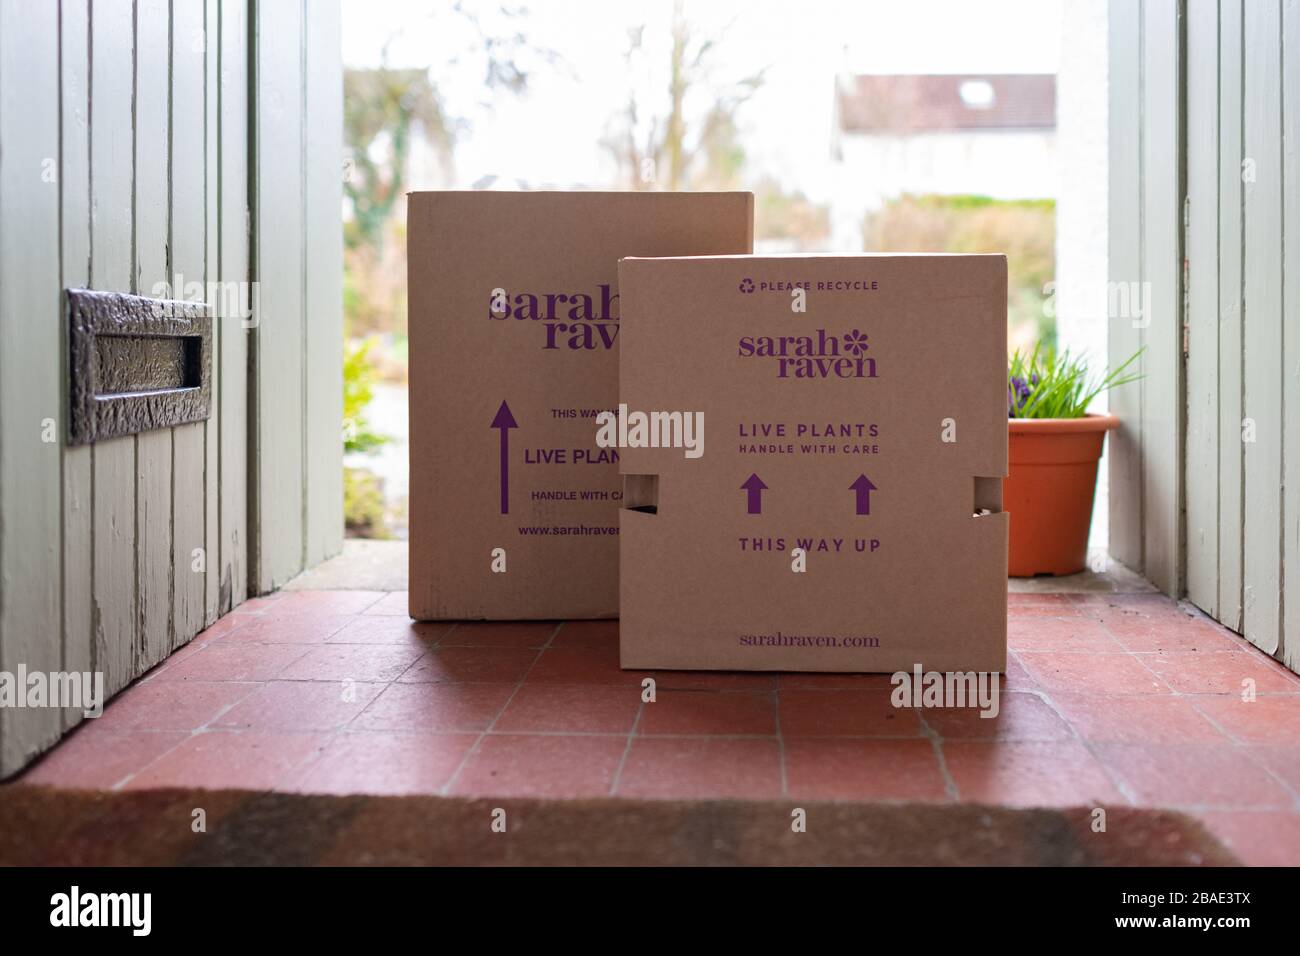 Mail order gardening during the coronavirus outbreak - Sarah Raven parcels on doorstep - UK Stock Photo